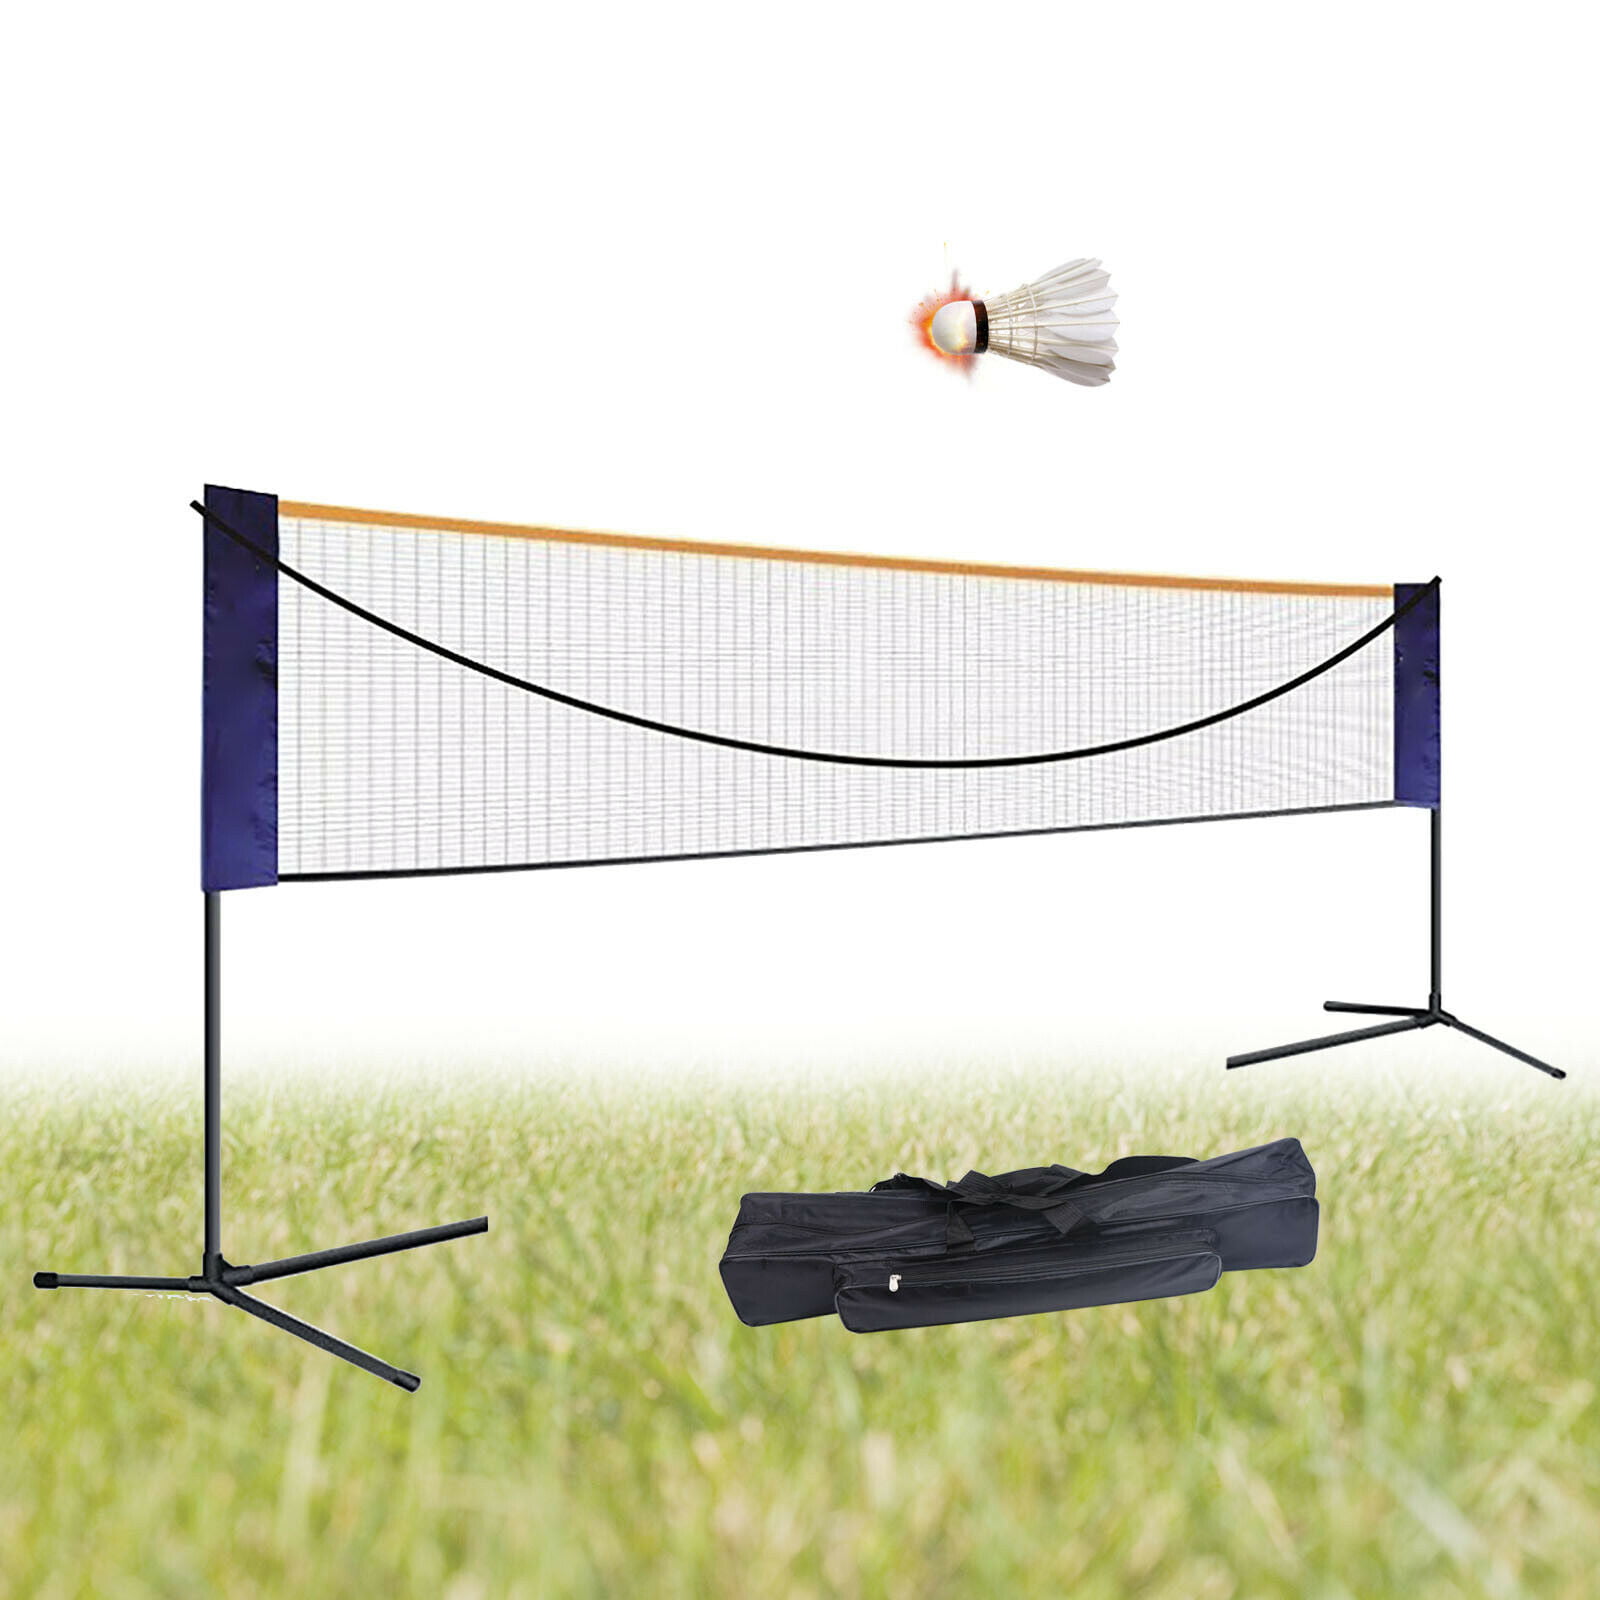 Details about   2PCS 20FT Badminton Tennis Volleyball Net Sports Mesh For Beach Garden Outdoor 